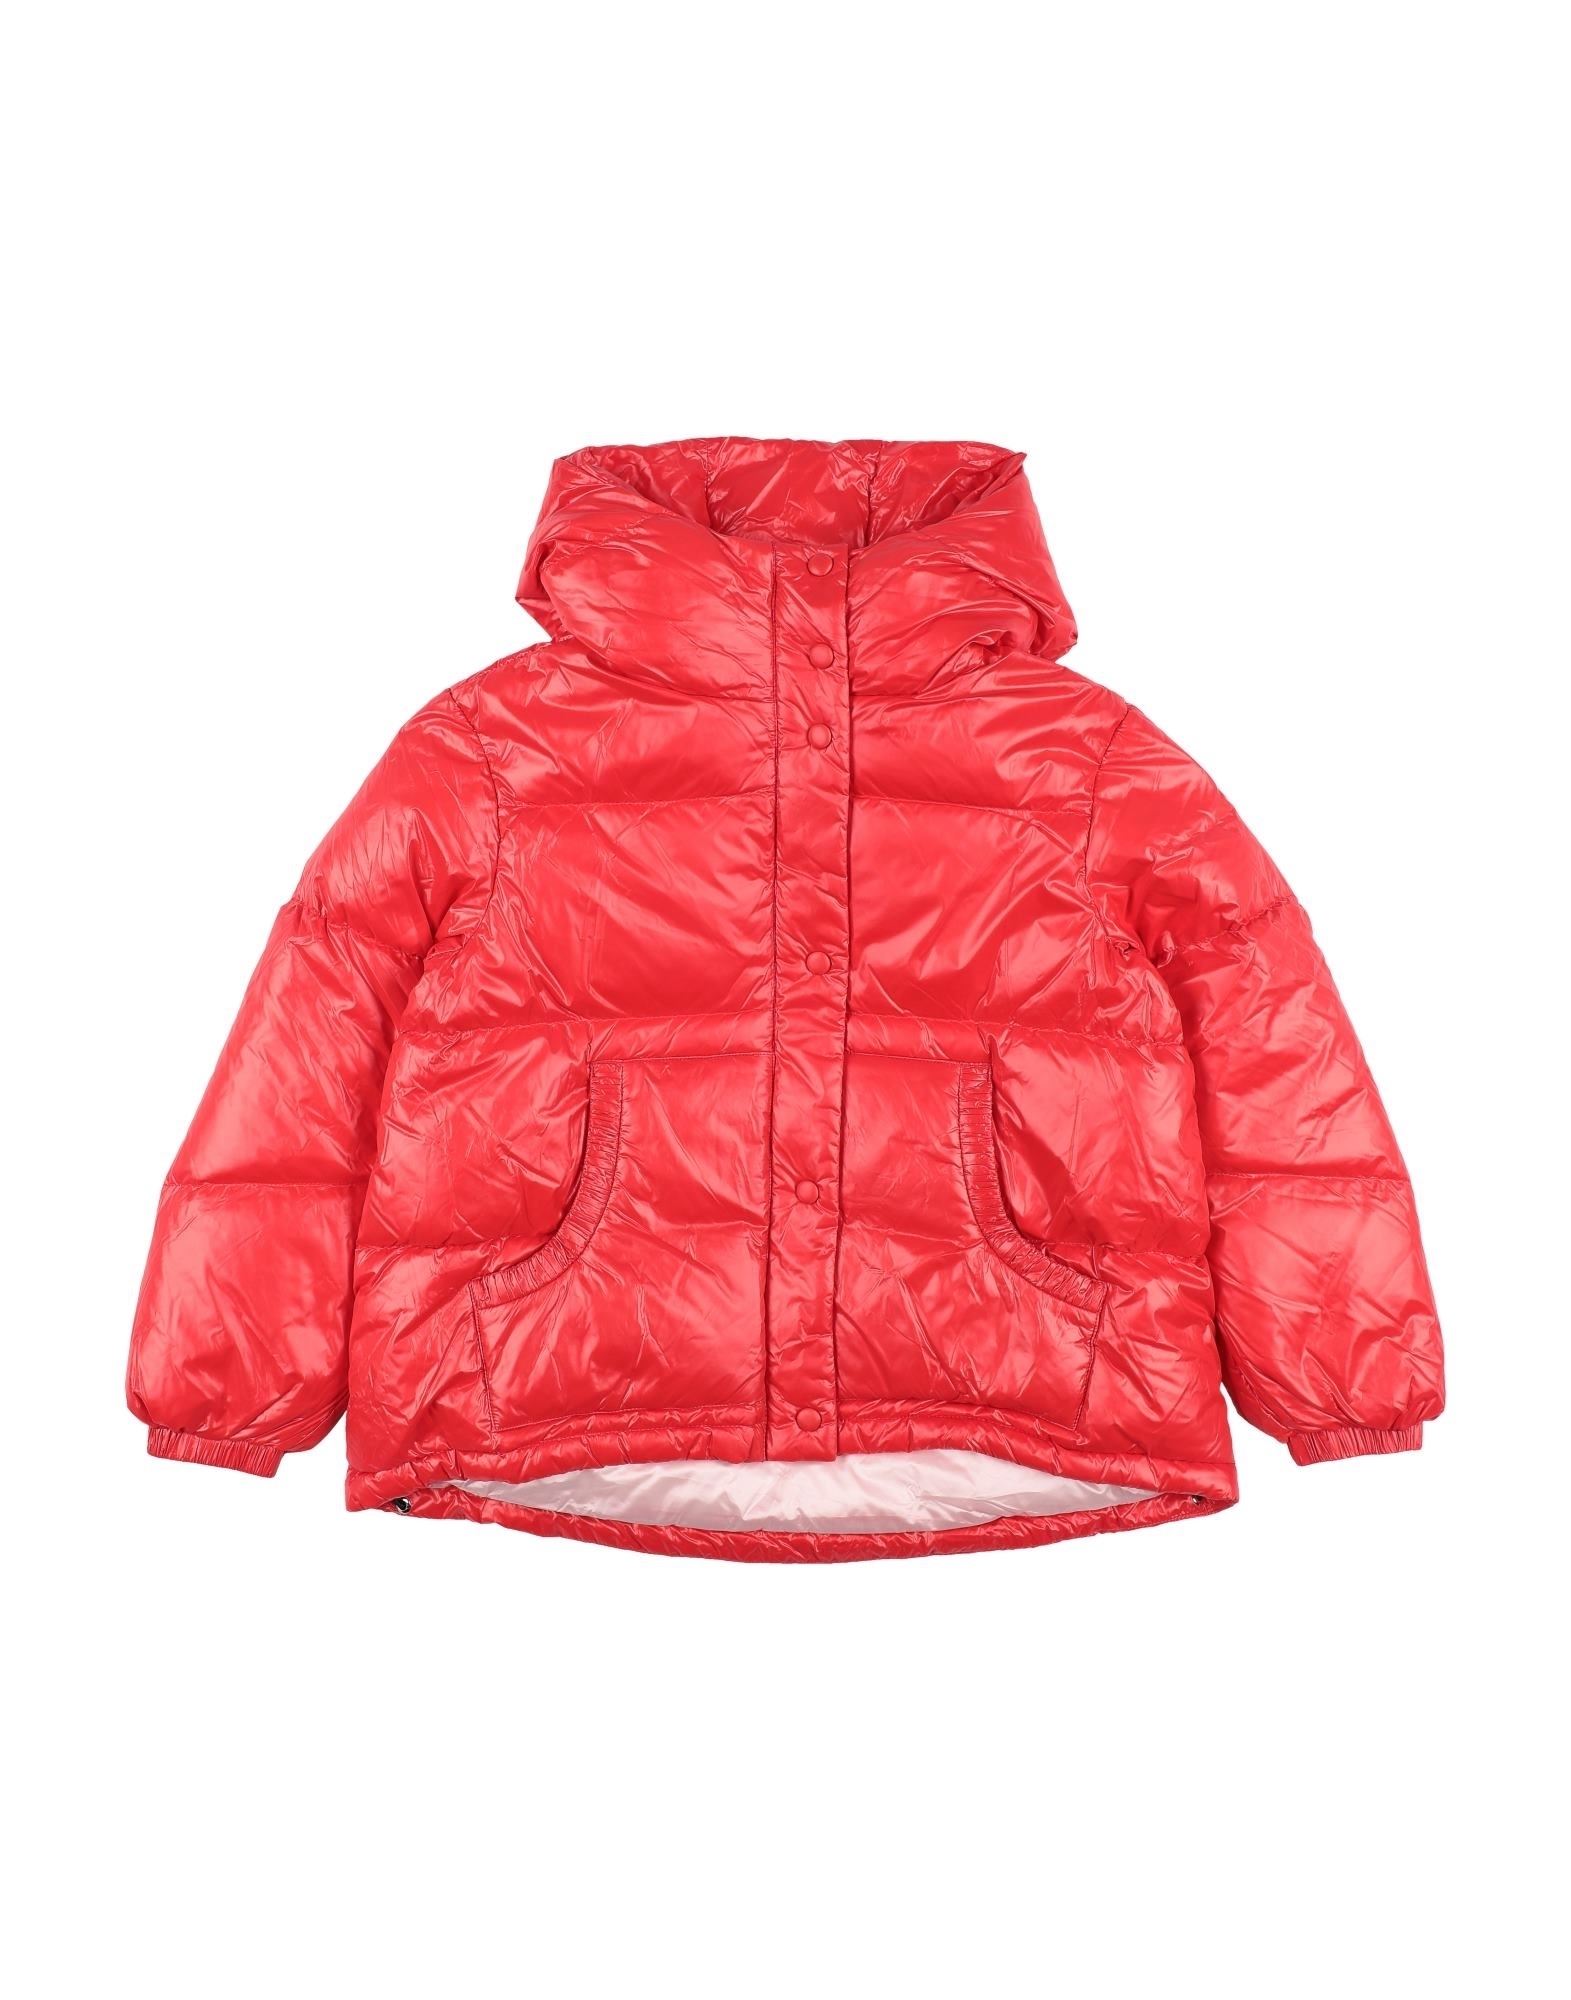 Add Kids' Down Jackets In Red